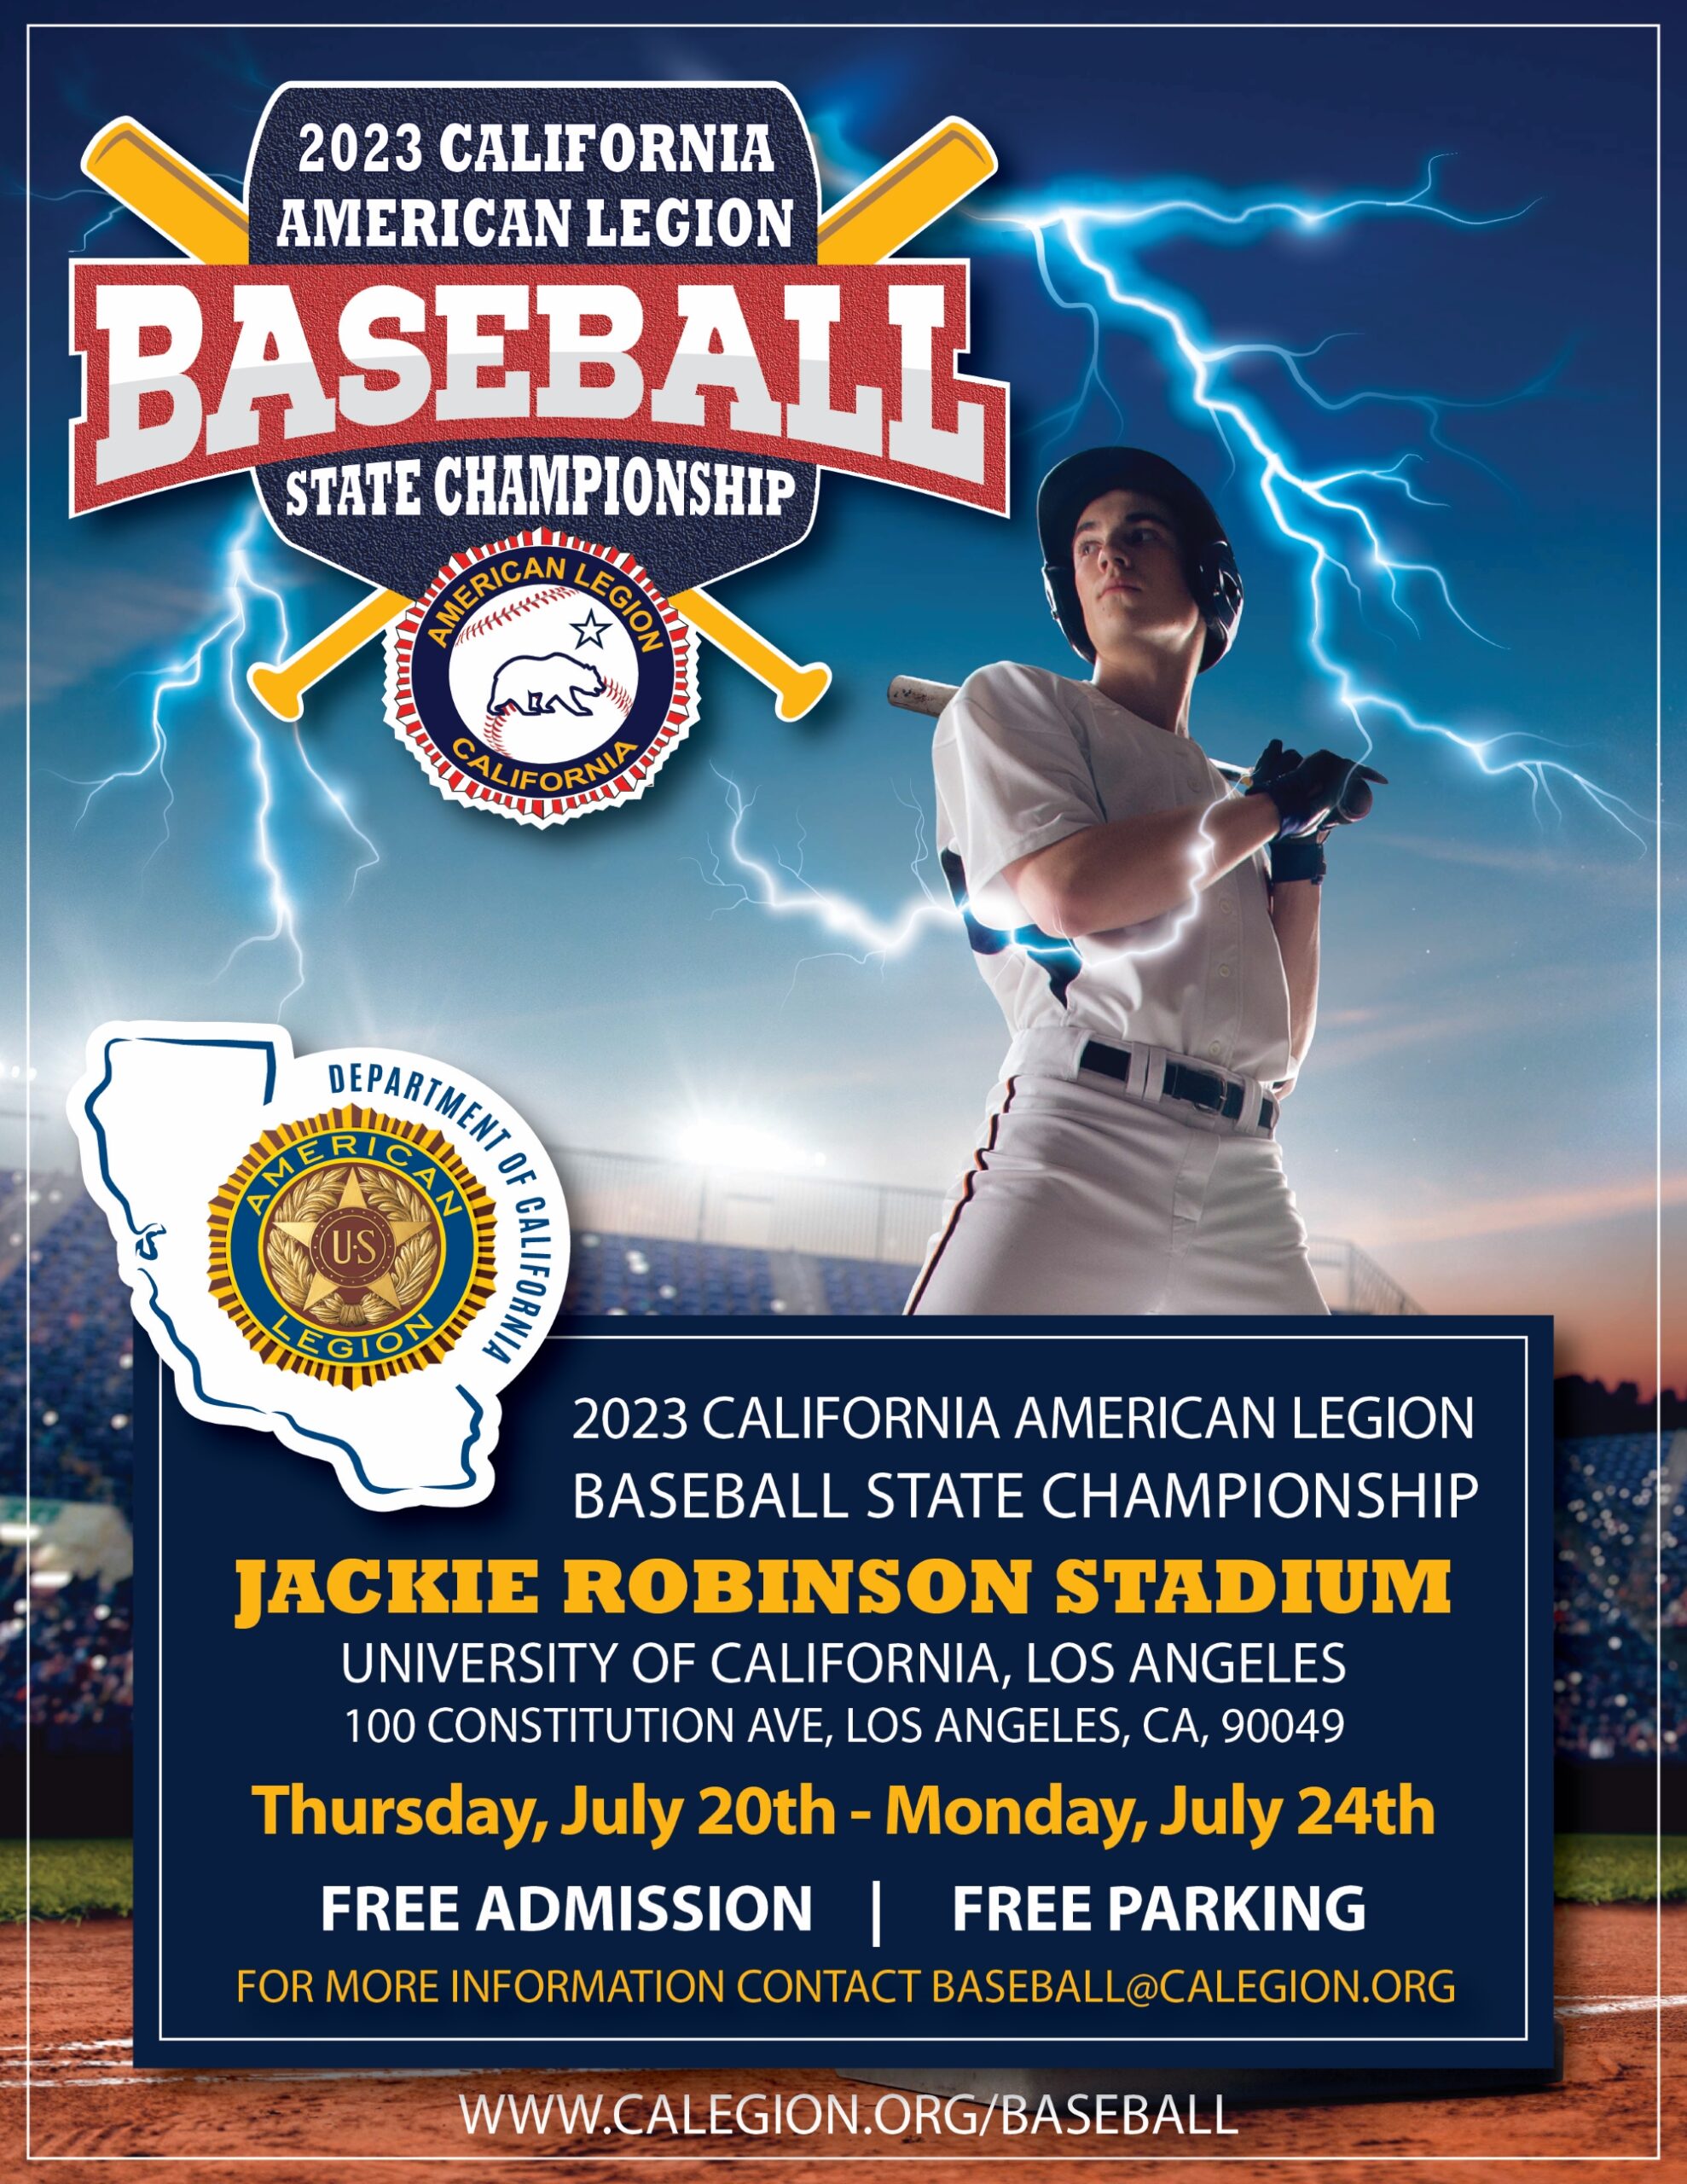 American Legion Baseball 2023 California State Championship Tournament